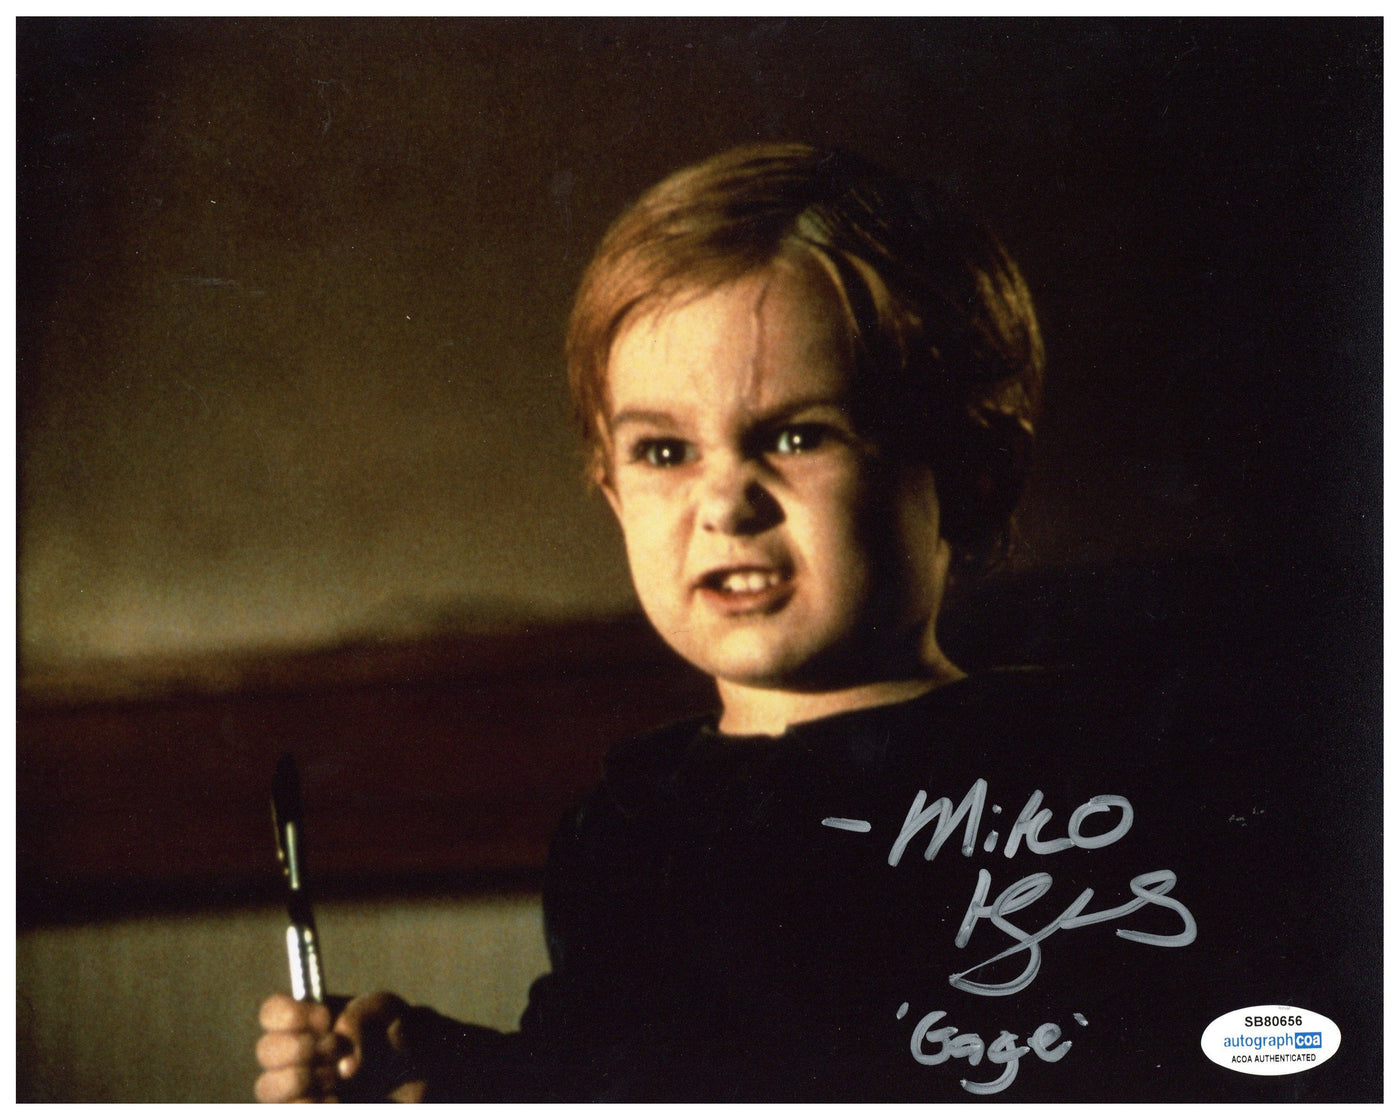 Miko Hughes Autographed 8x10 Pet Sematary Gage Photo Signed AutographCOA